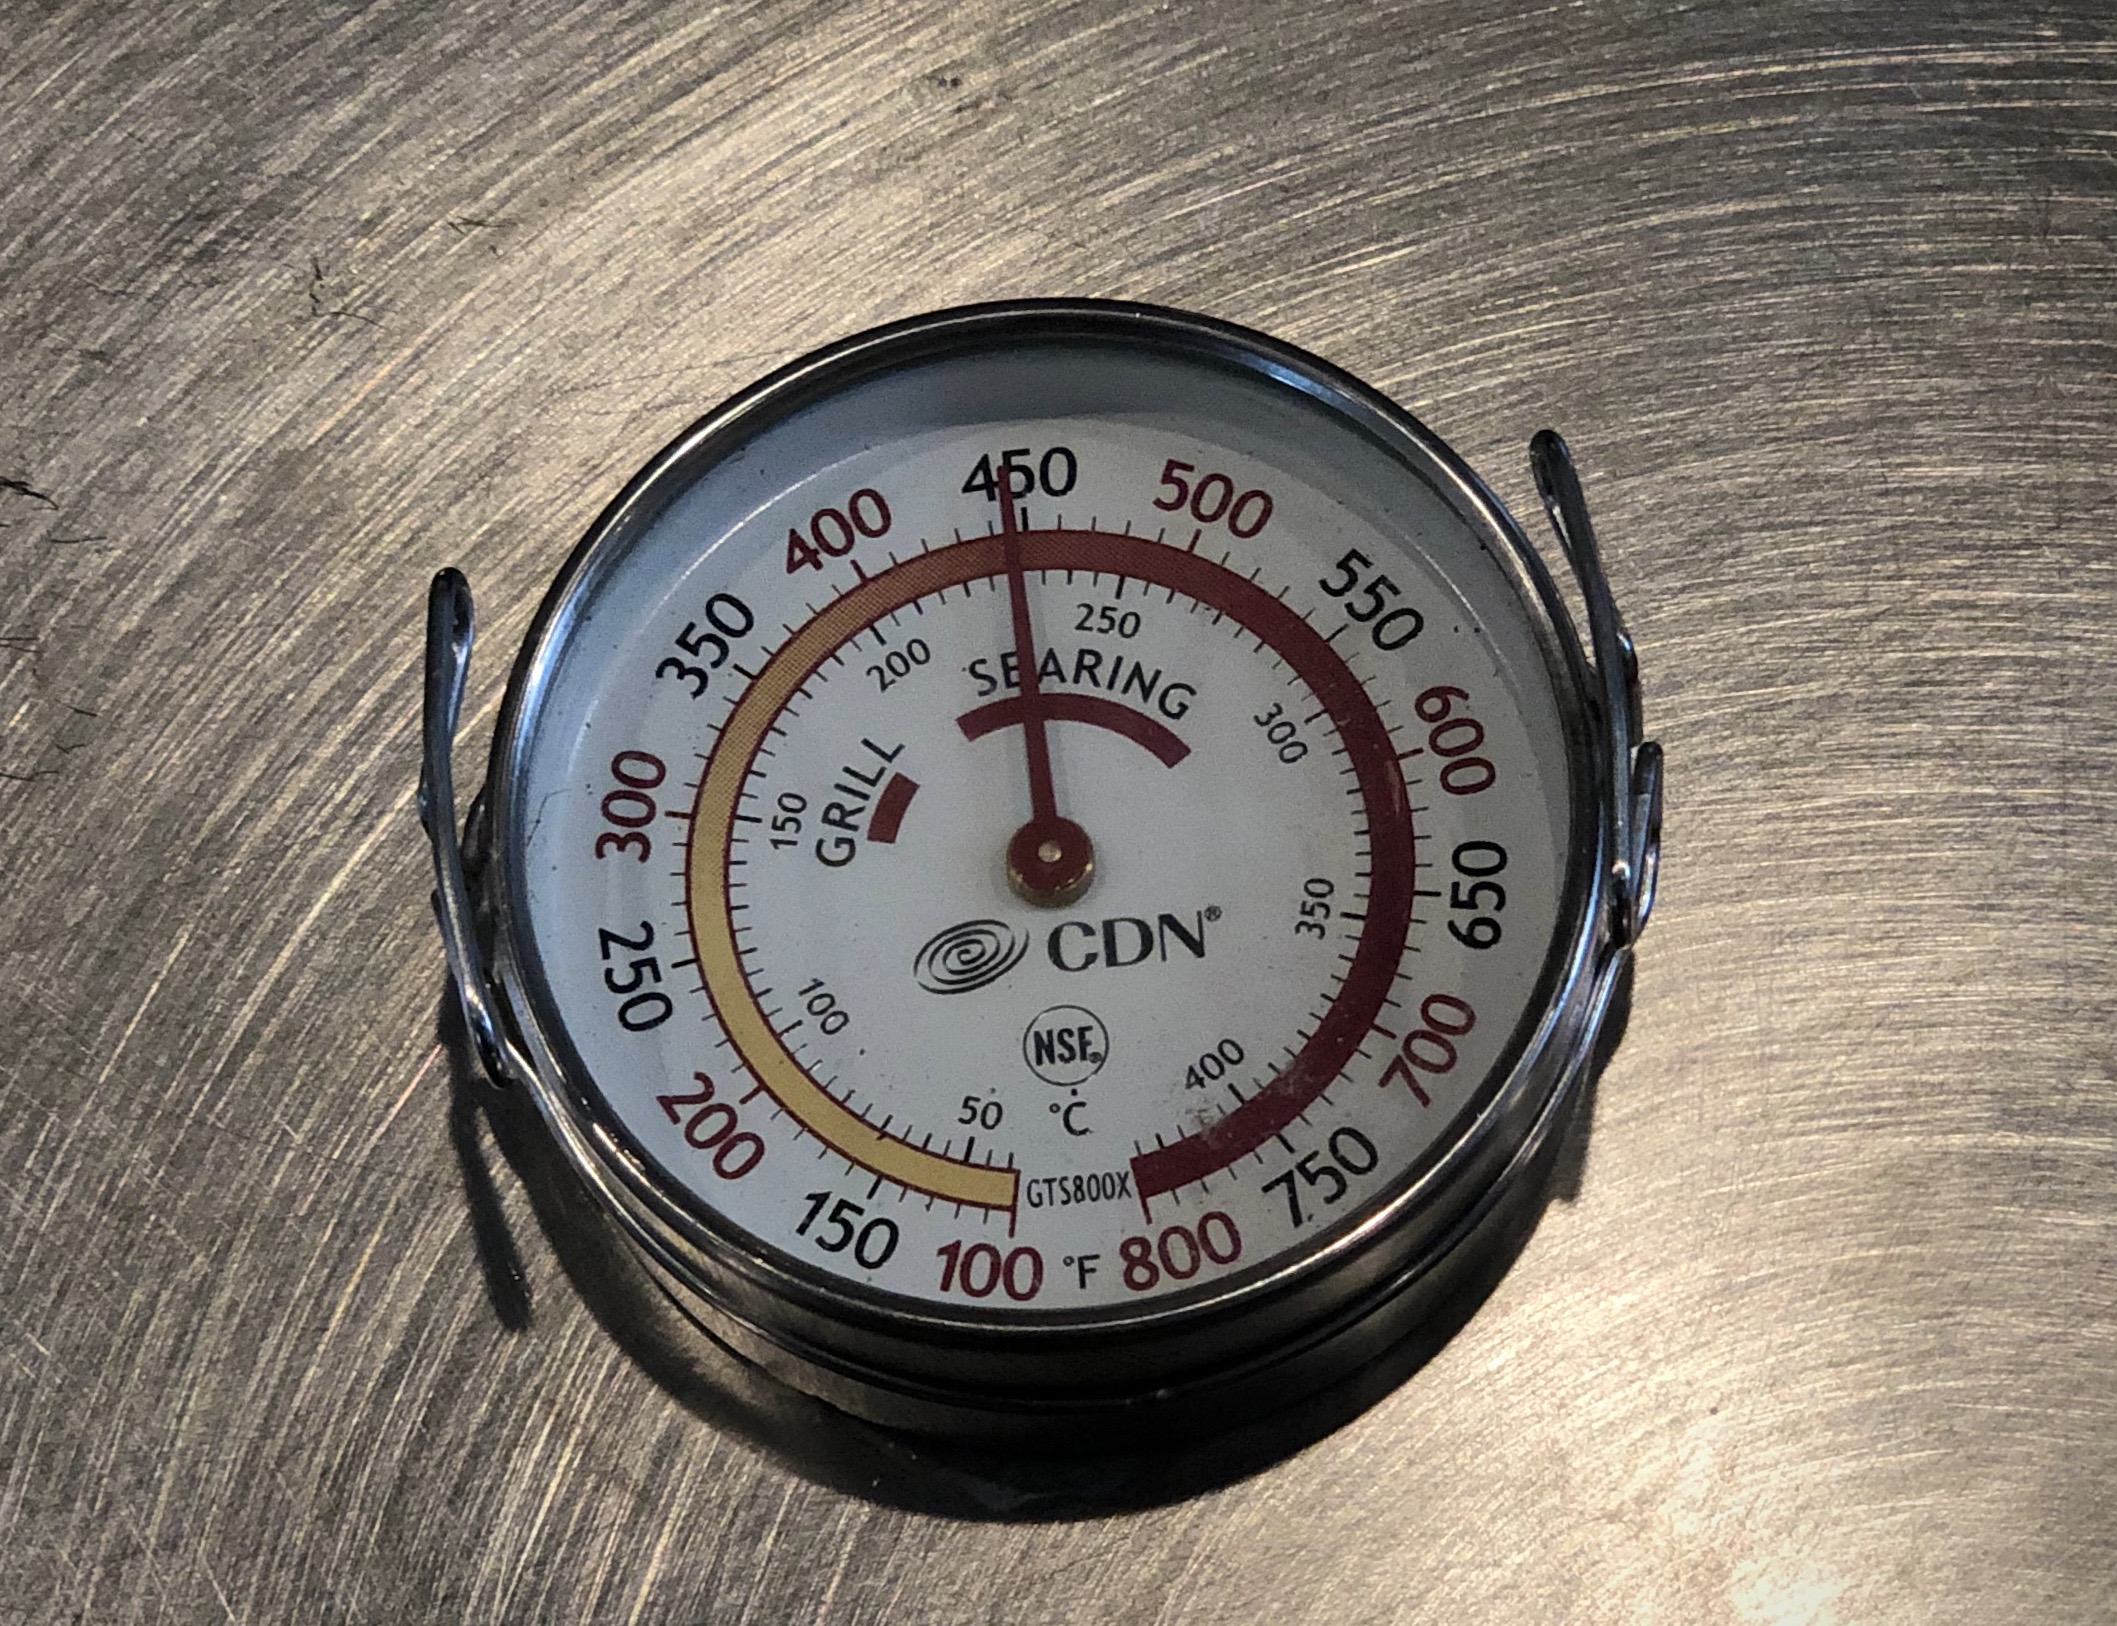 High Heat Oven Thermometer - Abundant Kitchen